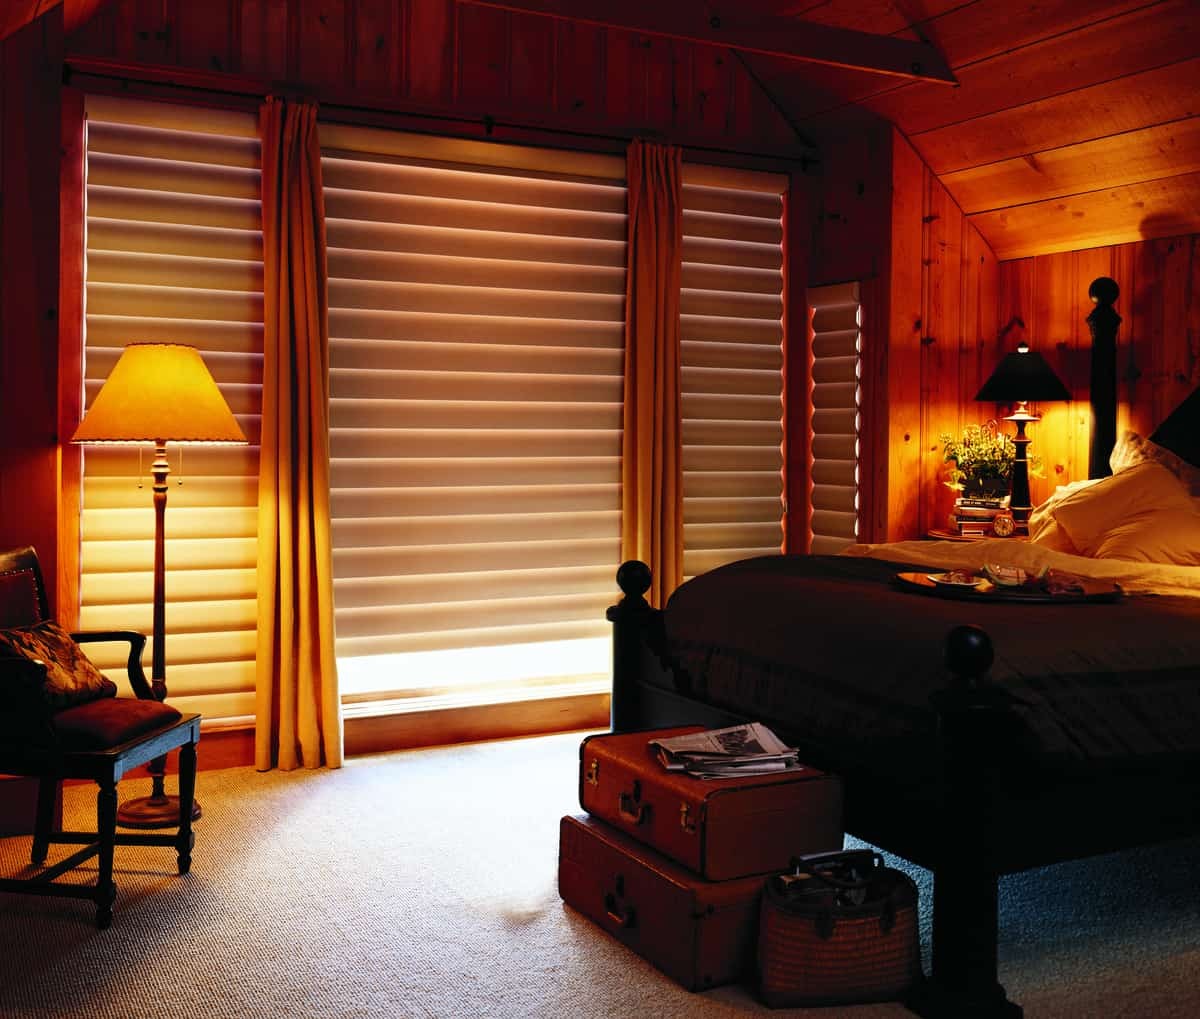 Design Studio™ Drapery Santa Fe, New Mexico (NM) coordinating with custom bedding for smart bedroom design.